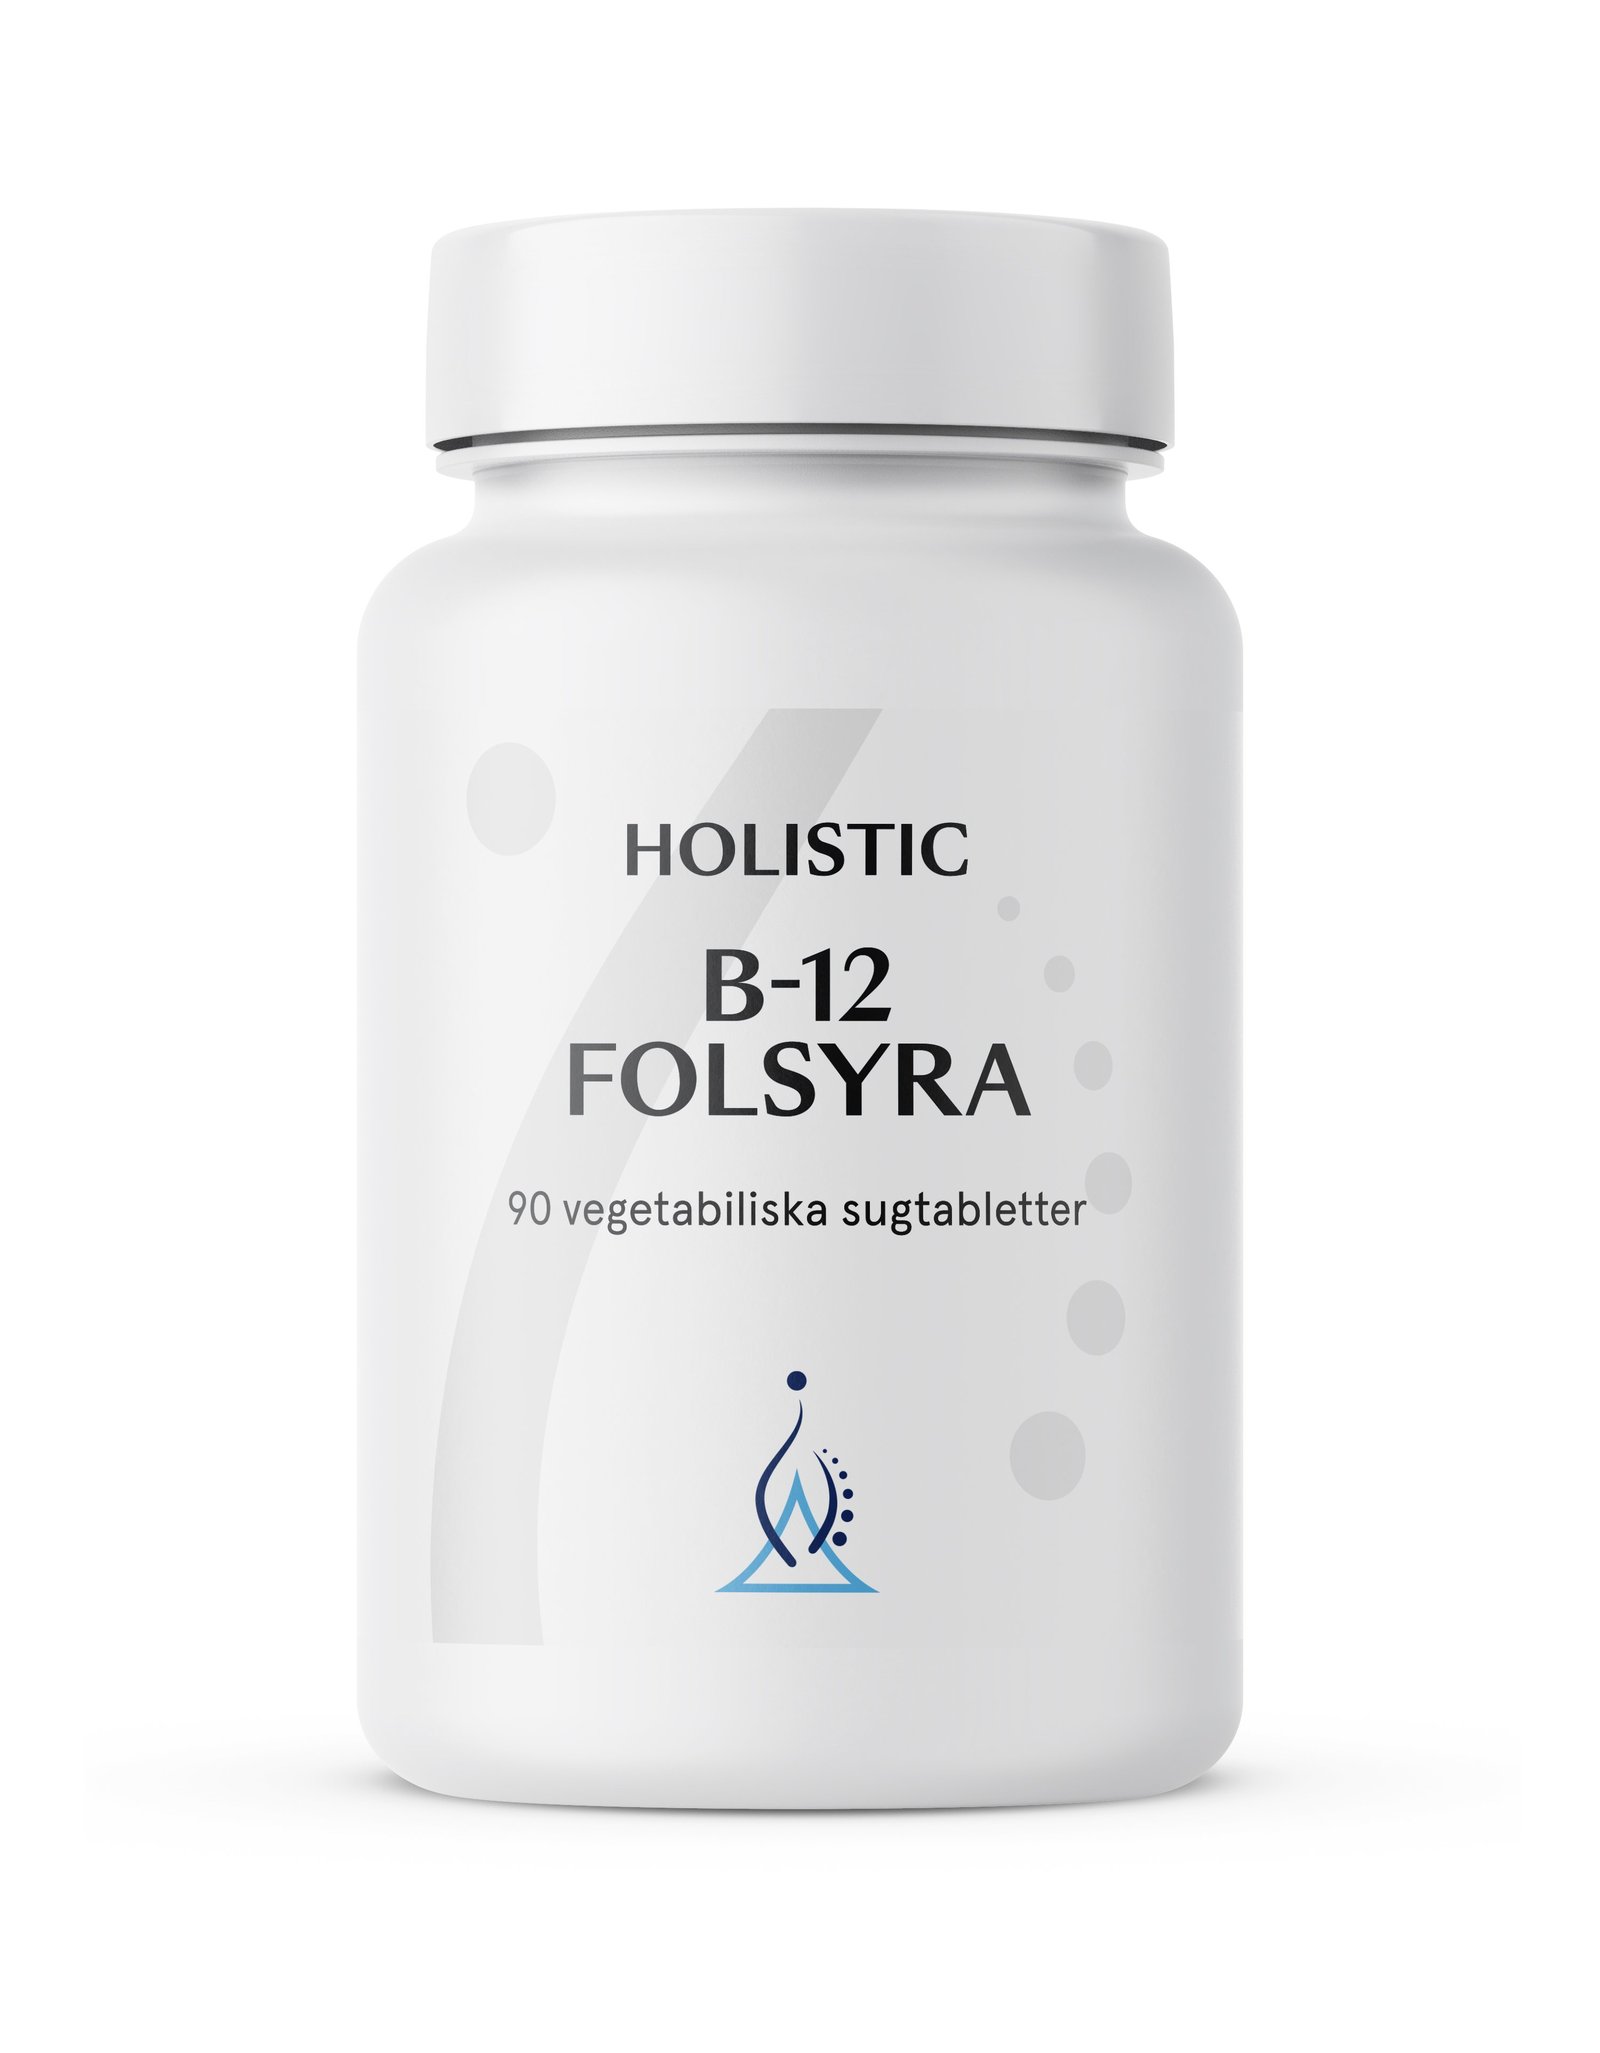 Holistic B-12 Folsyra 90 vegetabiliska sugtabletter